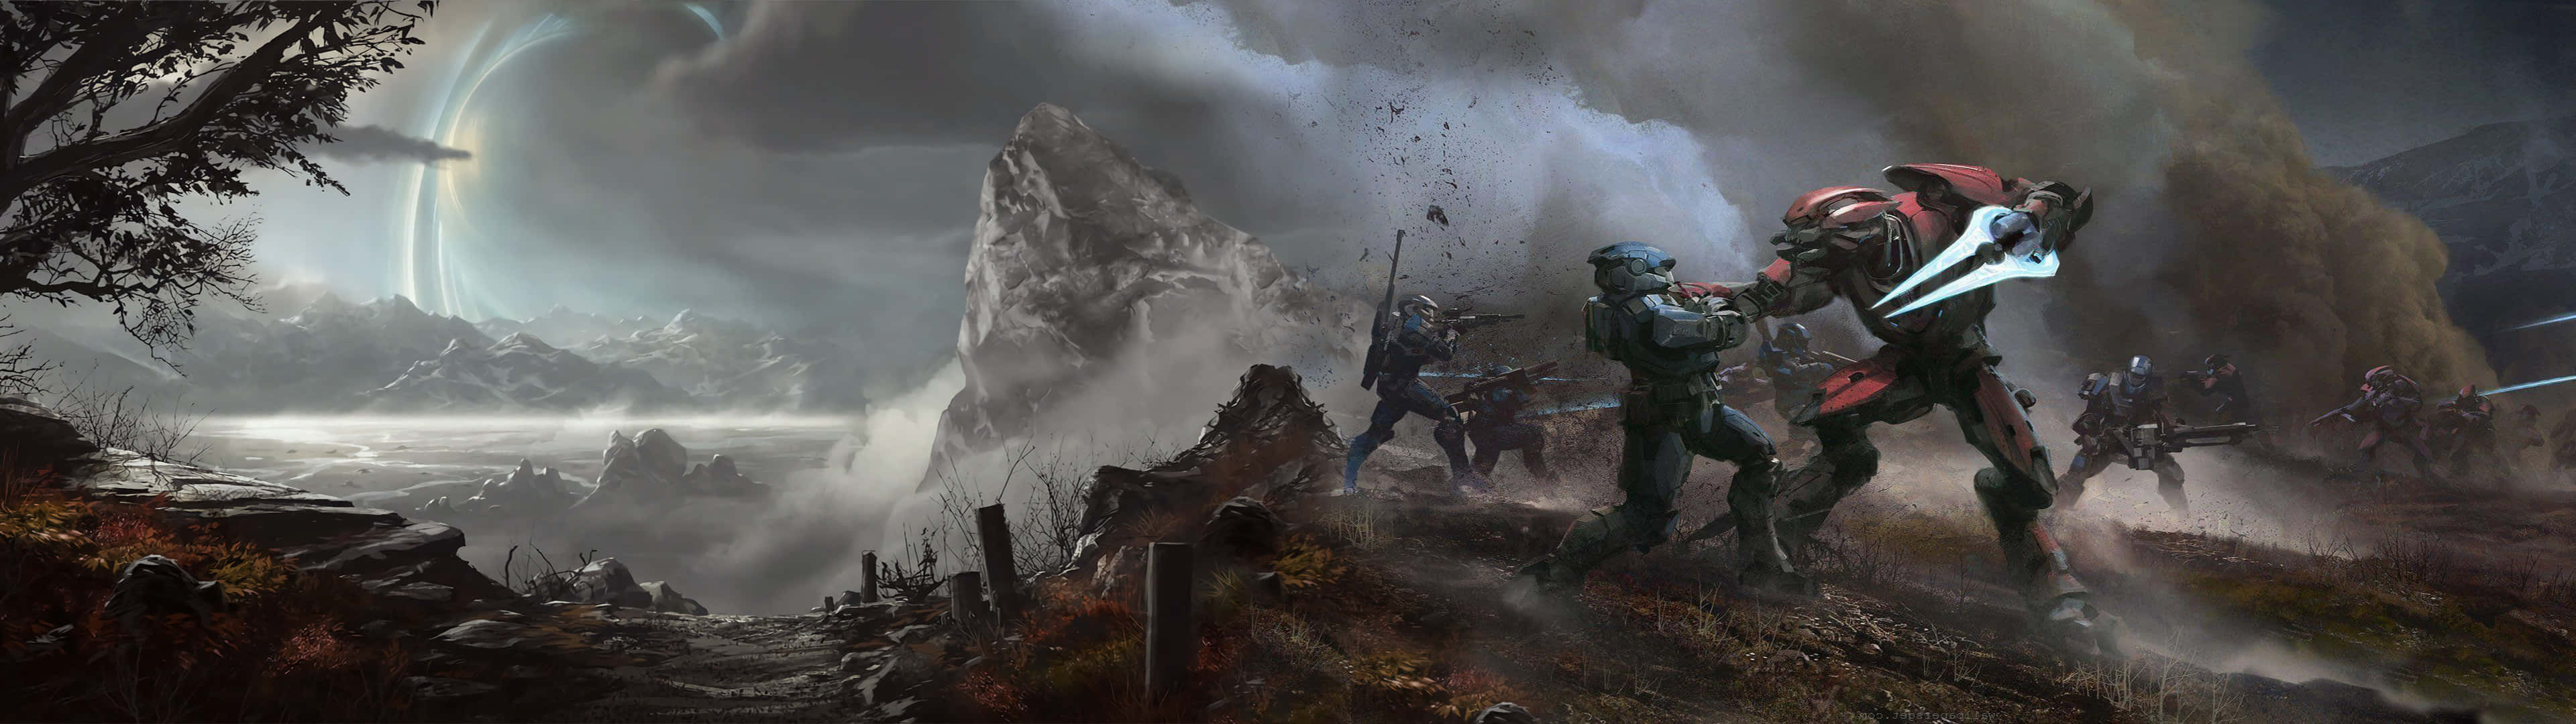 Download Epic Halo Battle Scene Wallpaper | Wallpapers.com